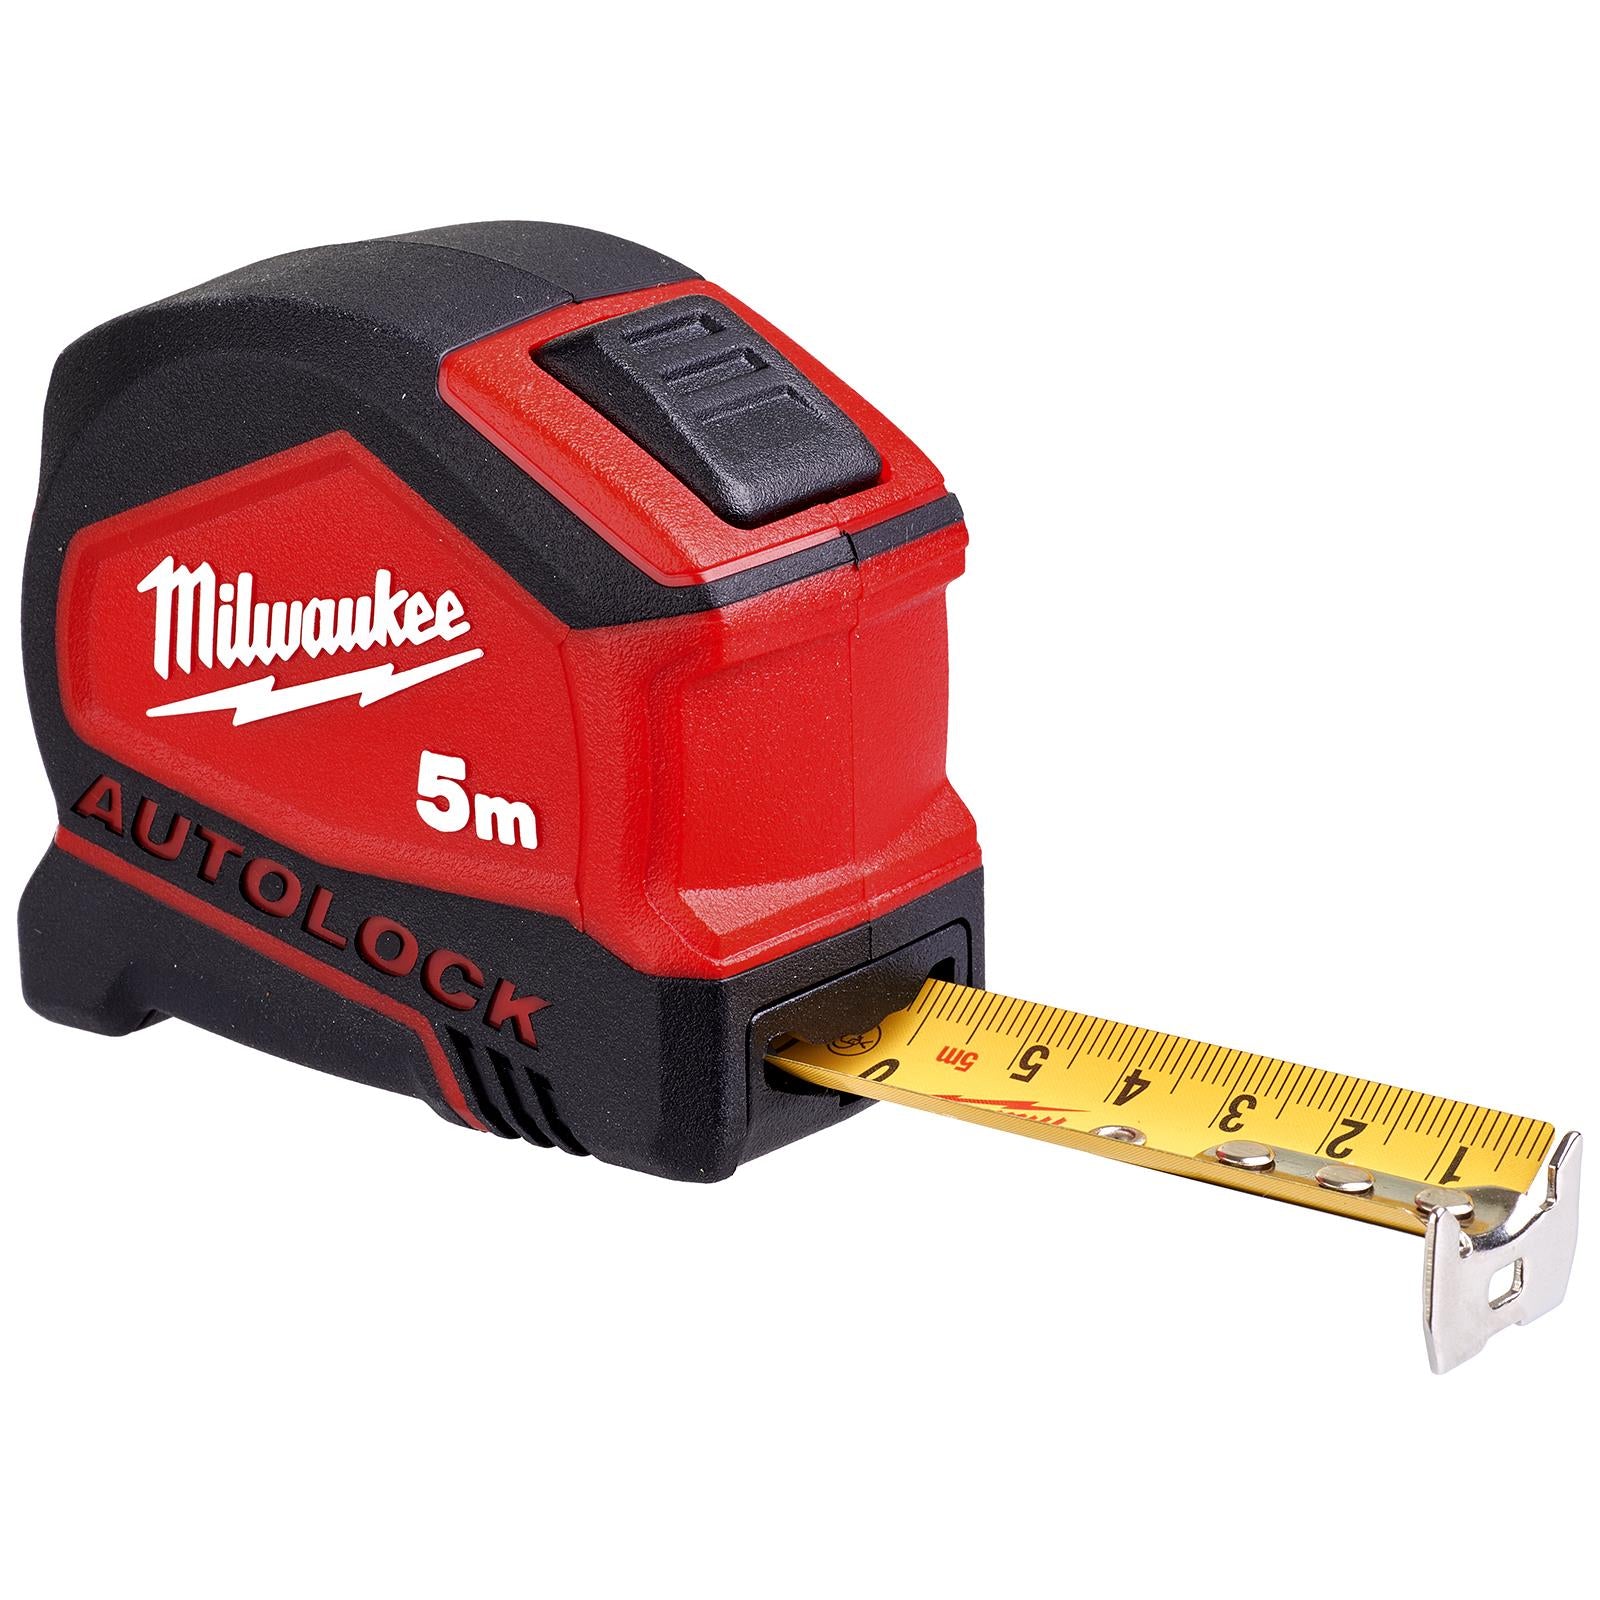 Milwaukee Tape Measure 5m Metric Autolock 25mm Blade Width